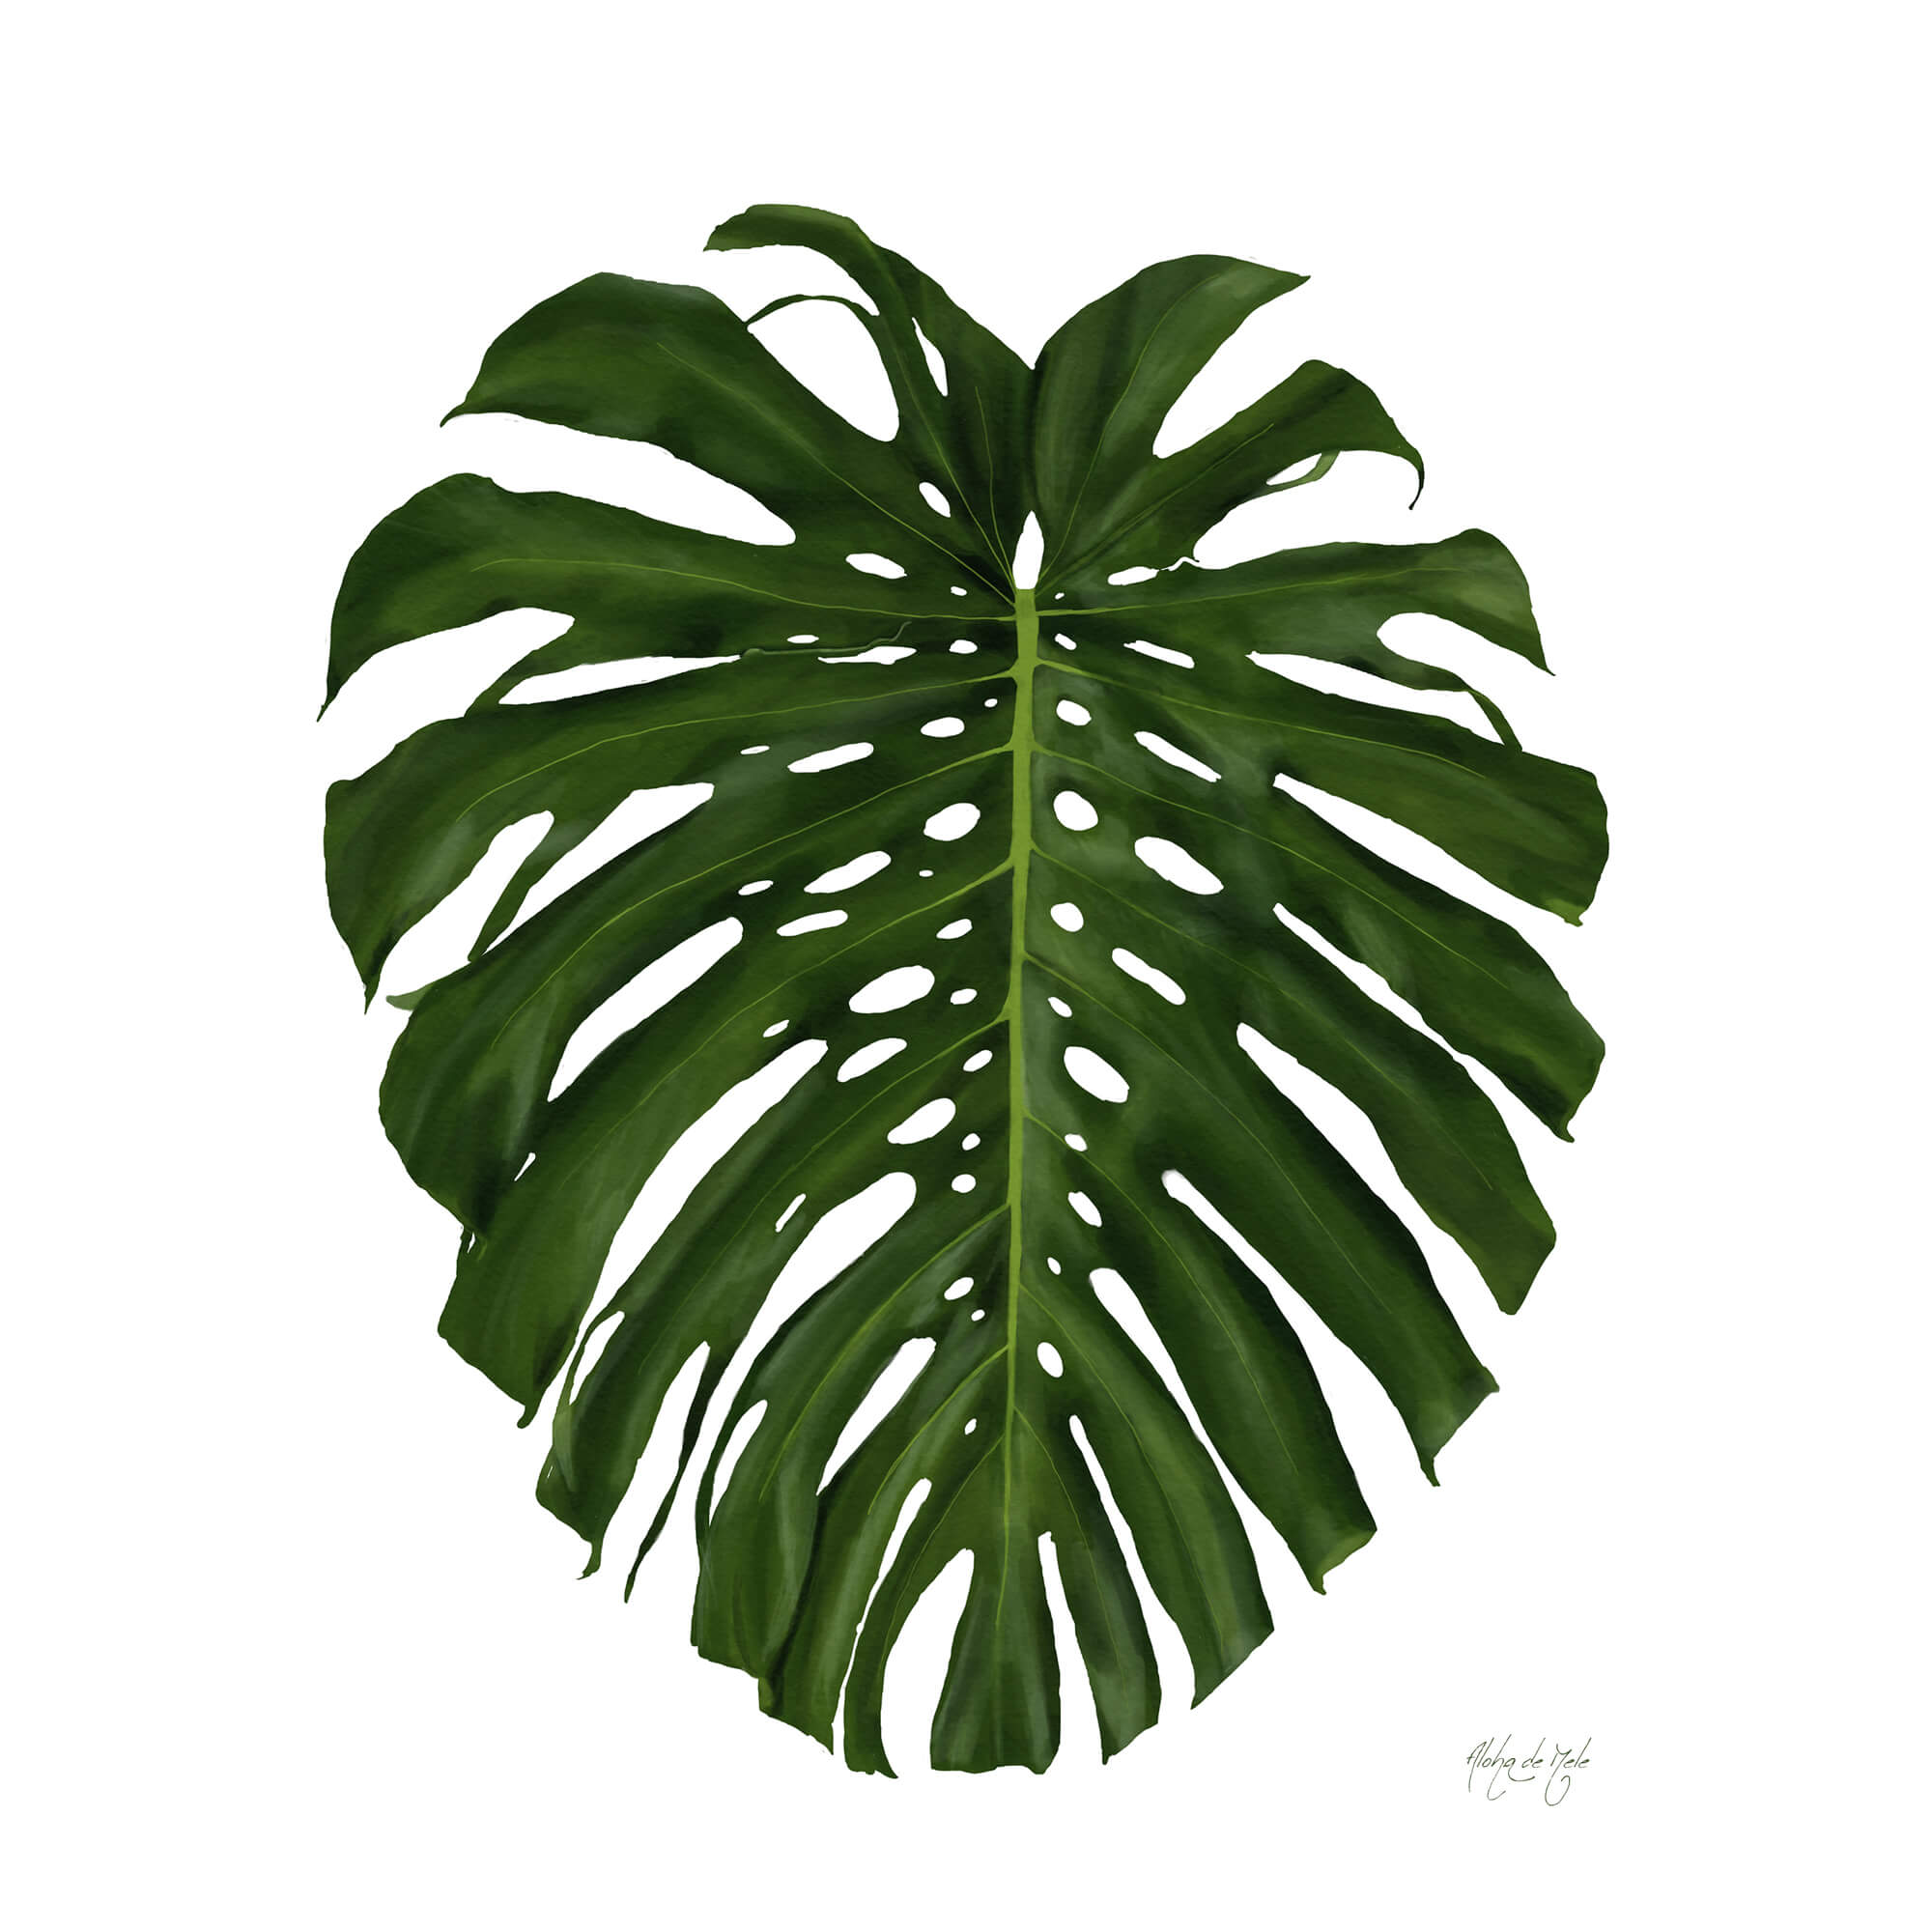 A matted art print of a beautifully painted monstera leaf by Hawaii artist Aloha De Mele